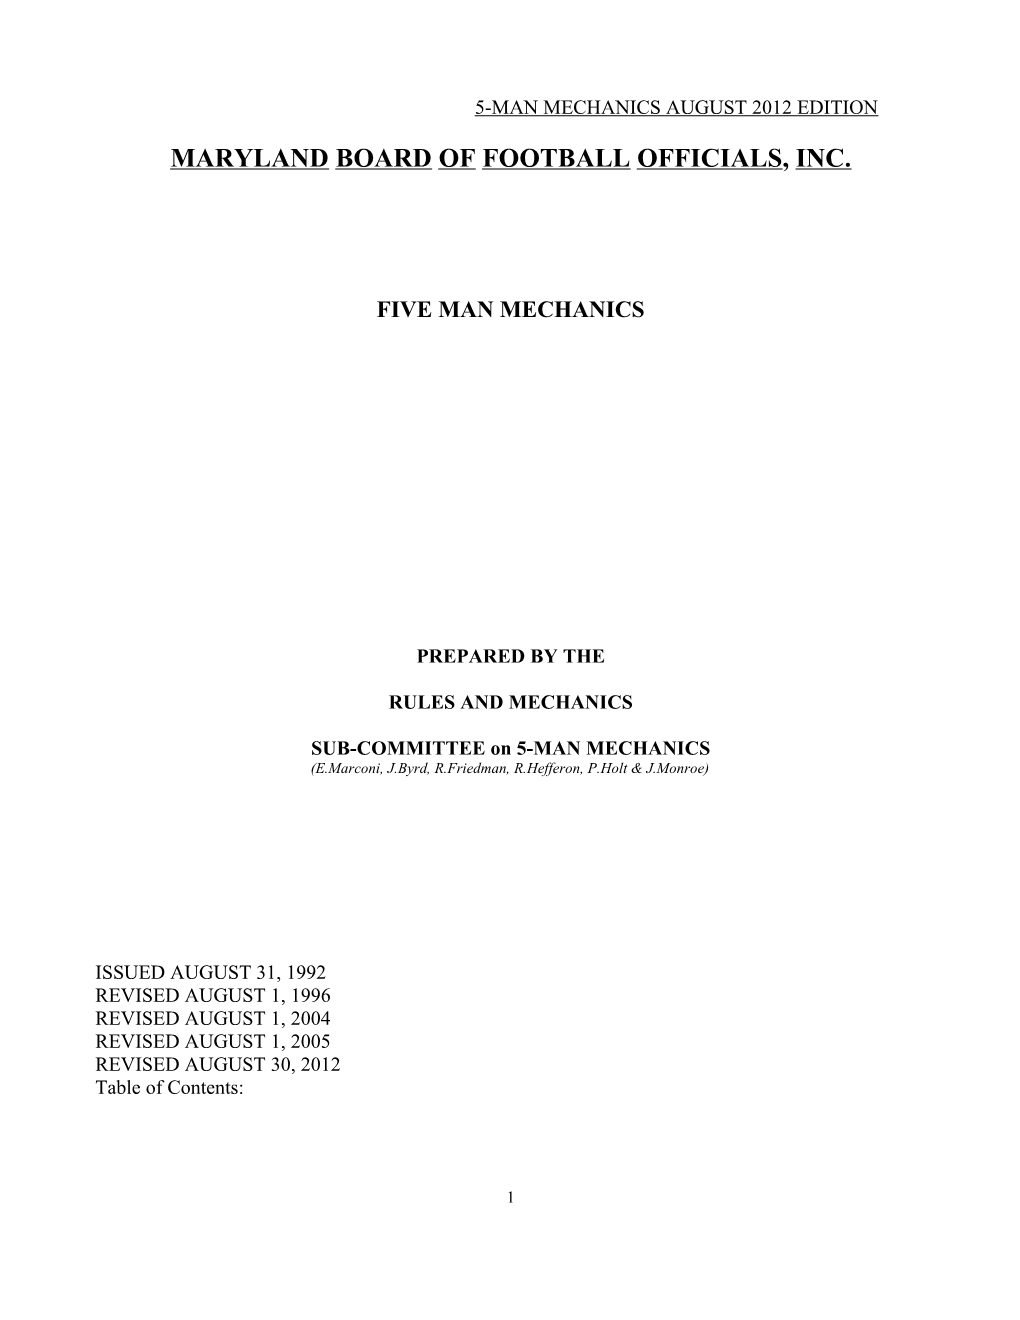 Maryland Board of Football Officials, Inc